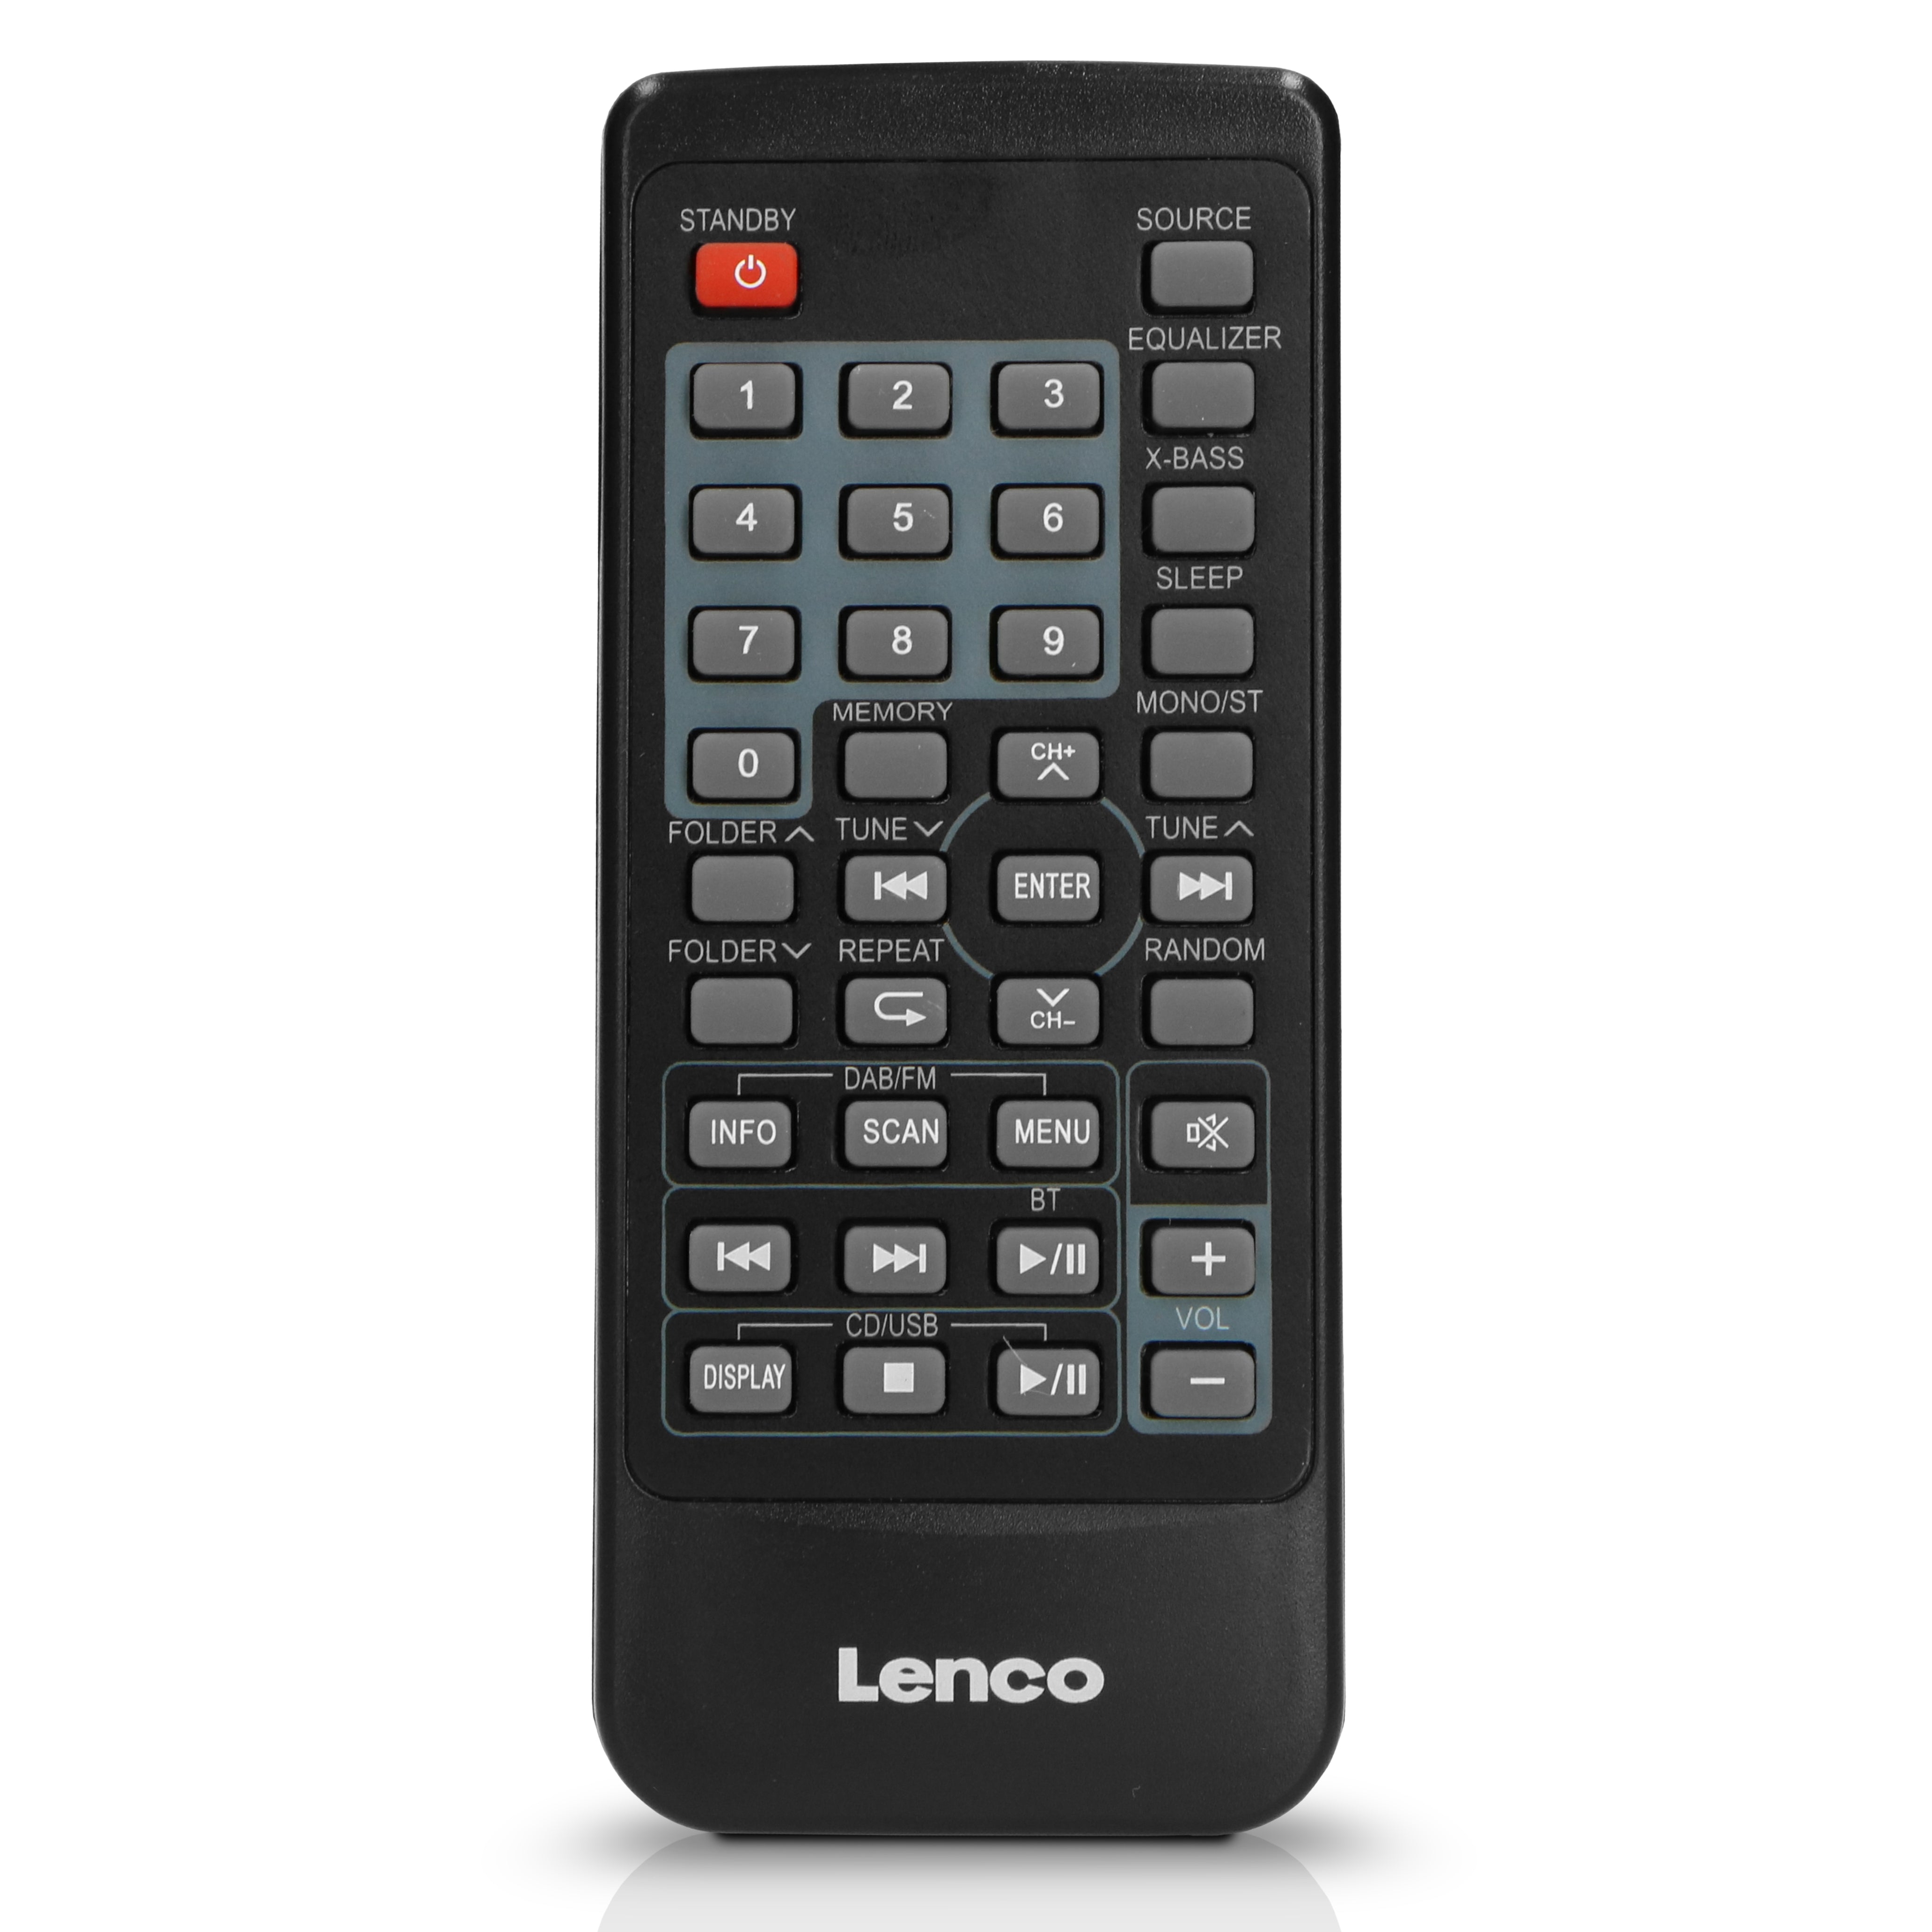 LENCO MC-150 UK - Stereo with DAB+ FM, CD, Bluetooth® & USB player - Black